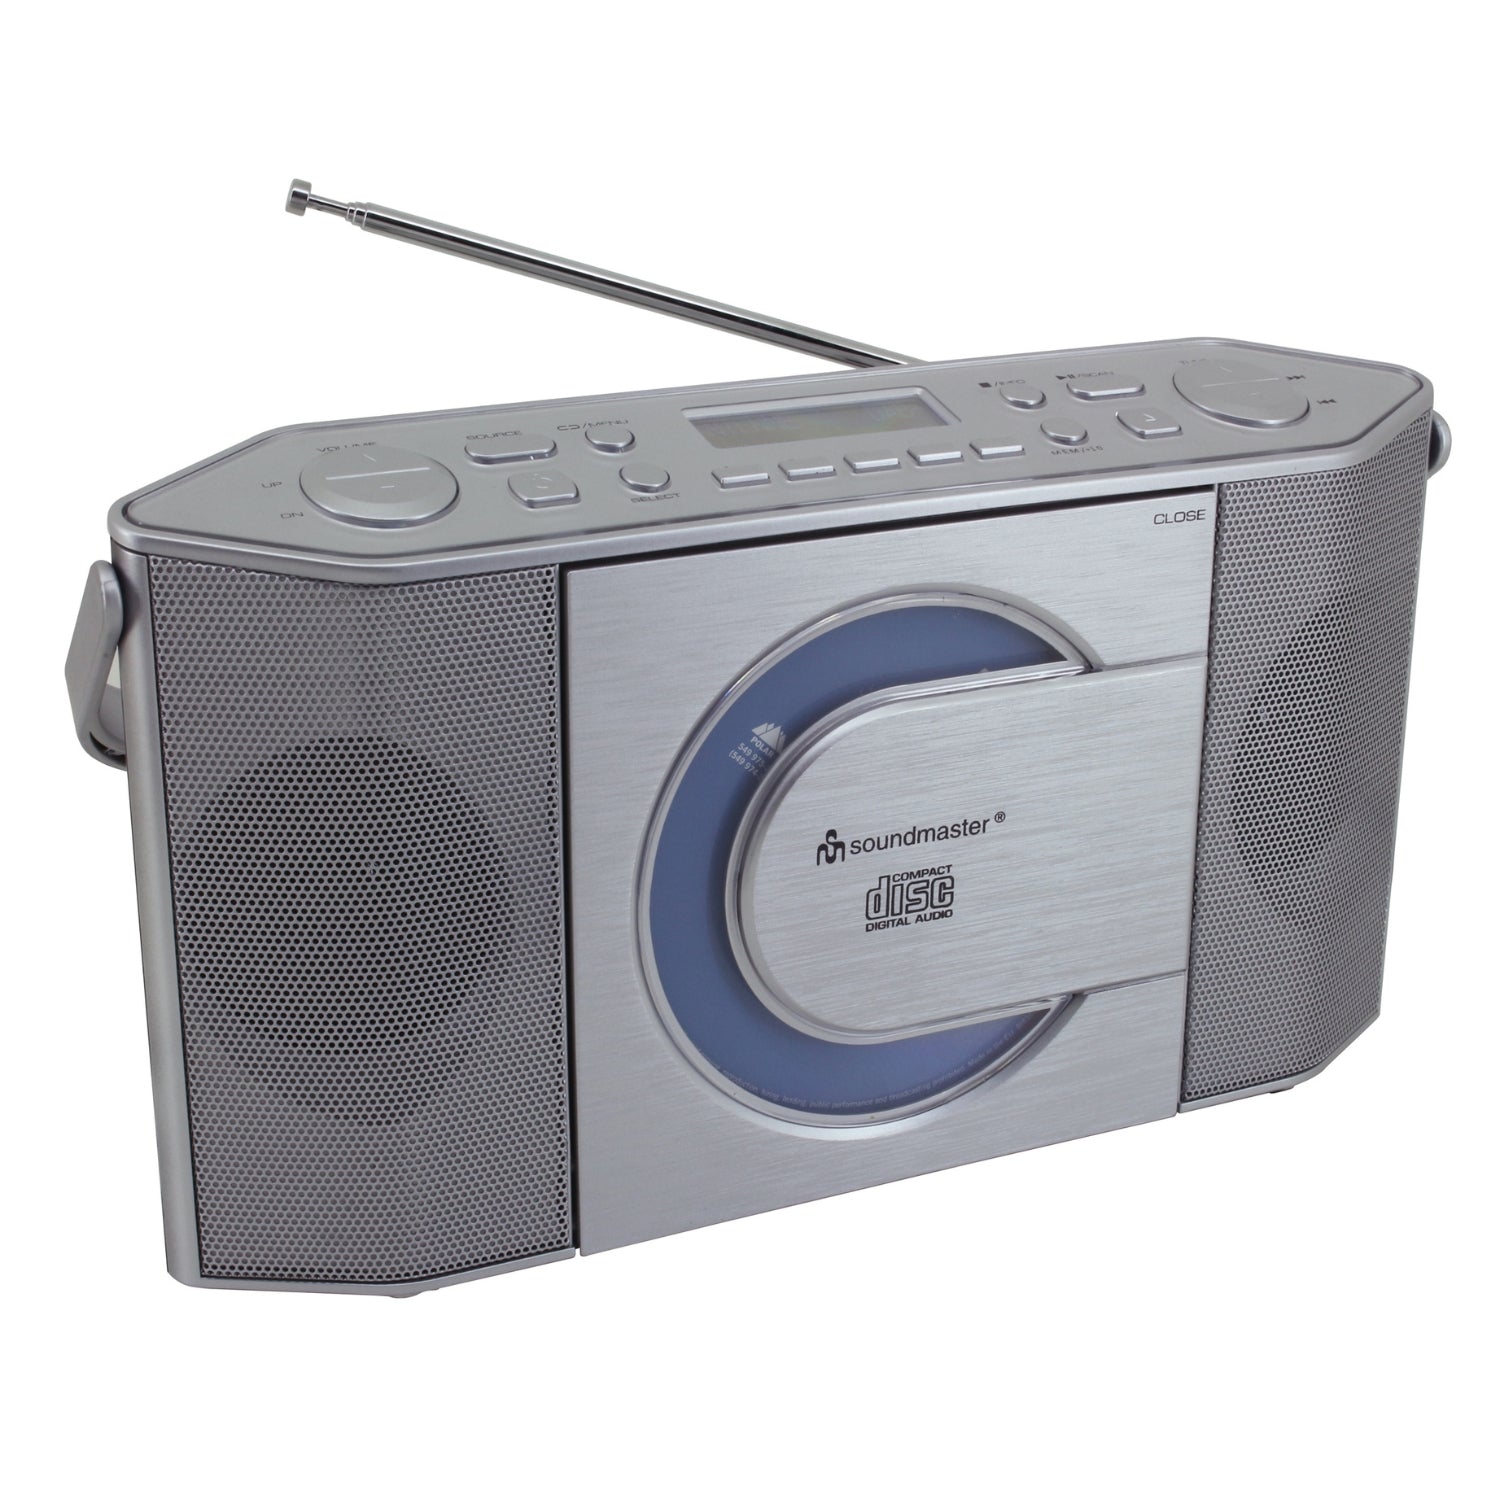 Soundmaster RCD1770SI tragbares Radio mit CD-Player digital DAB+ USB MP3 Kopfhöreranschluss Uhr